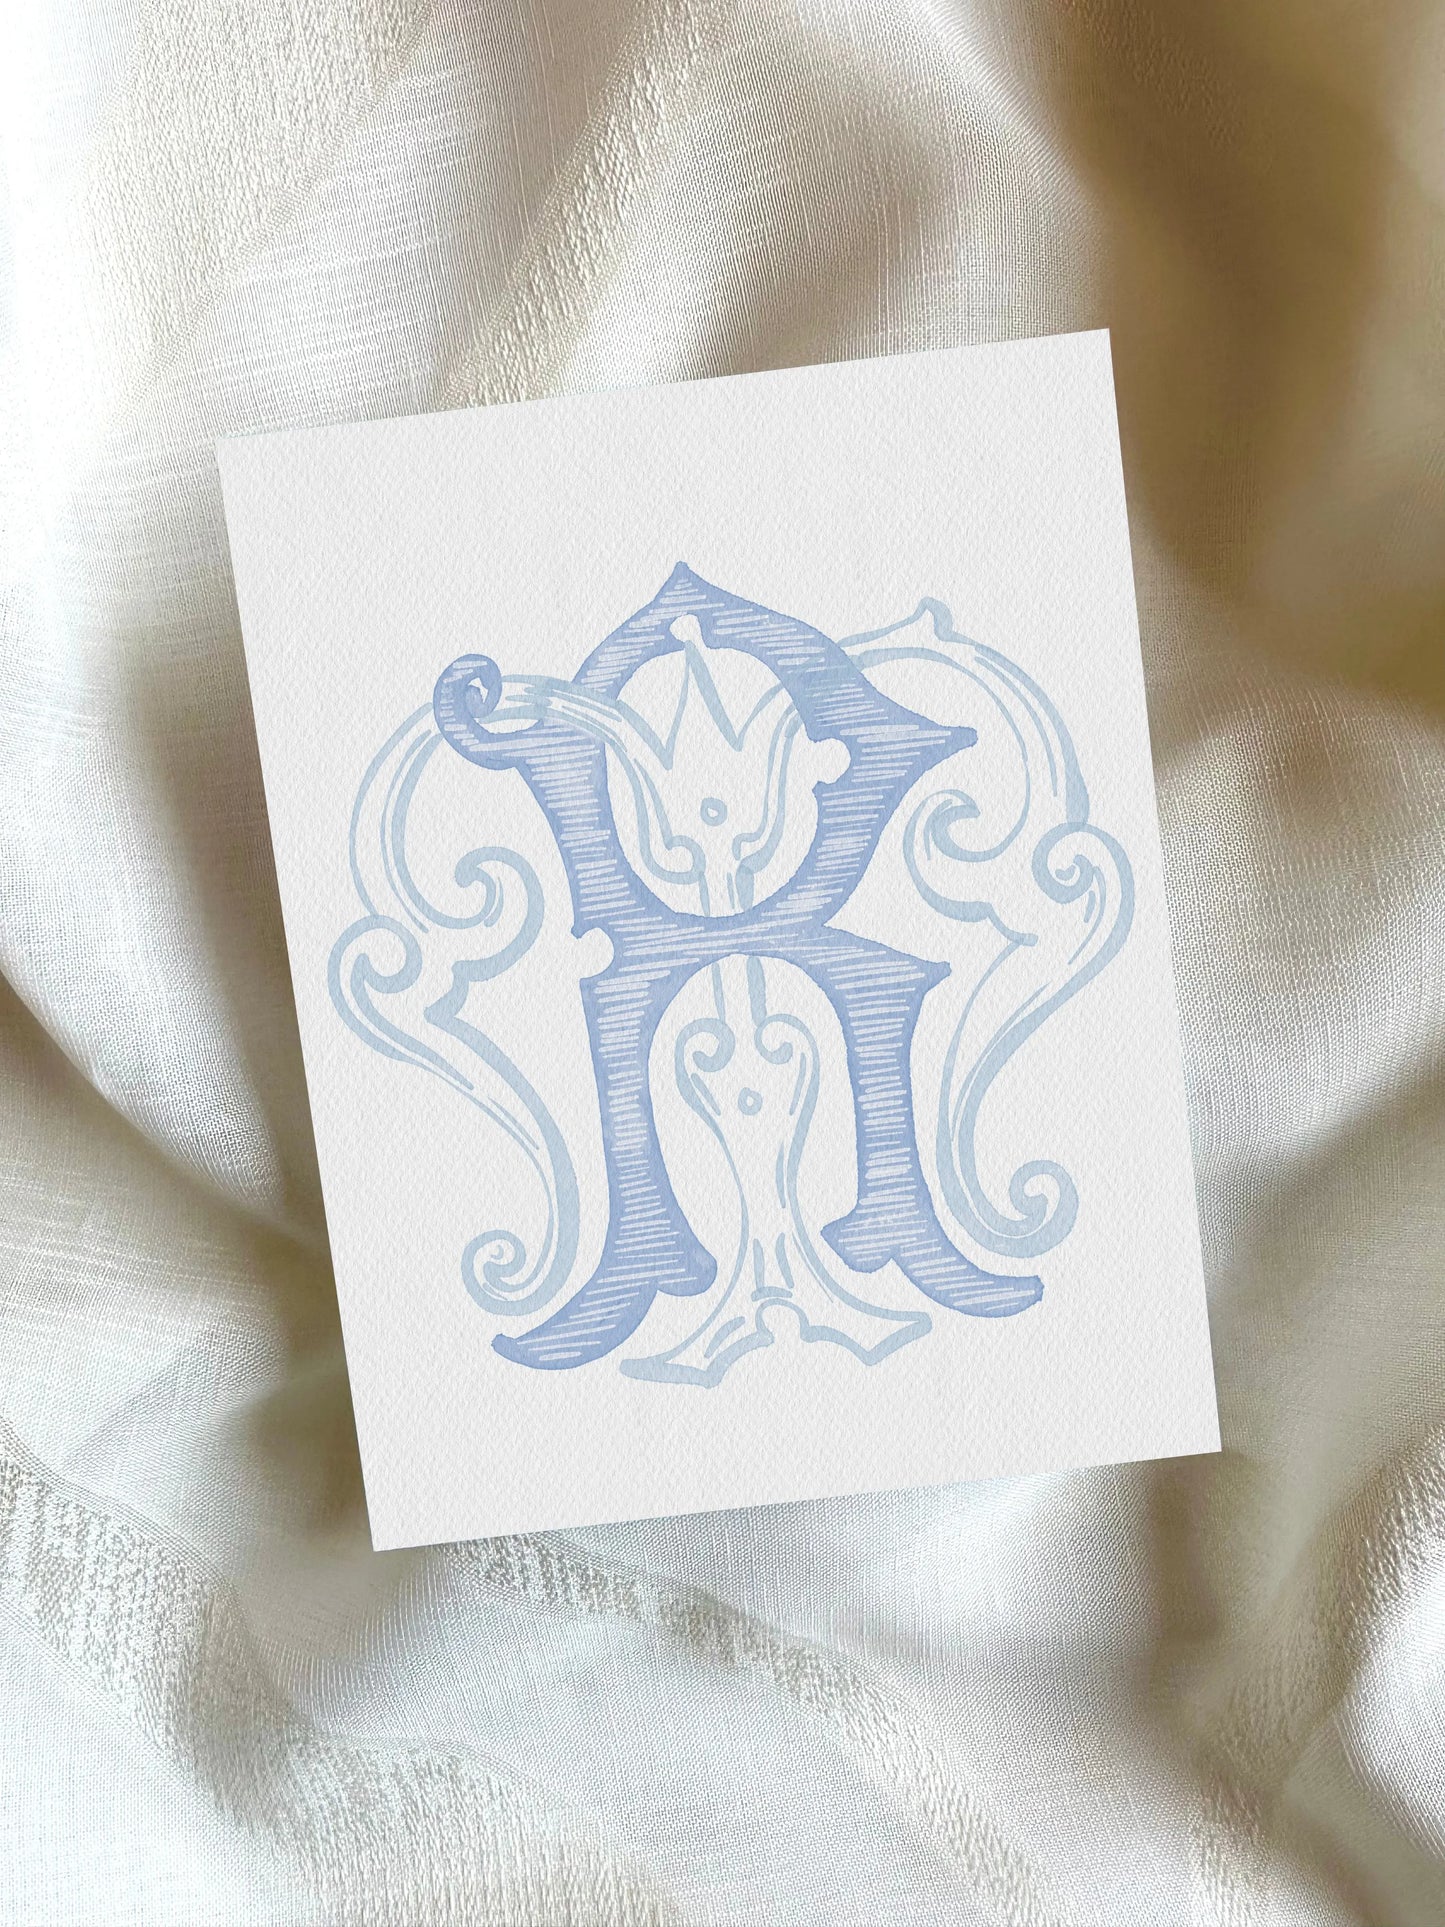 2 Letter Monogram with Letters MR | Digital Download - Wedding Monogram SVG, Personal Logo, Wedding Logo for Wedding Invitations The Wedding Crest Lab